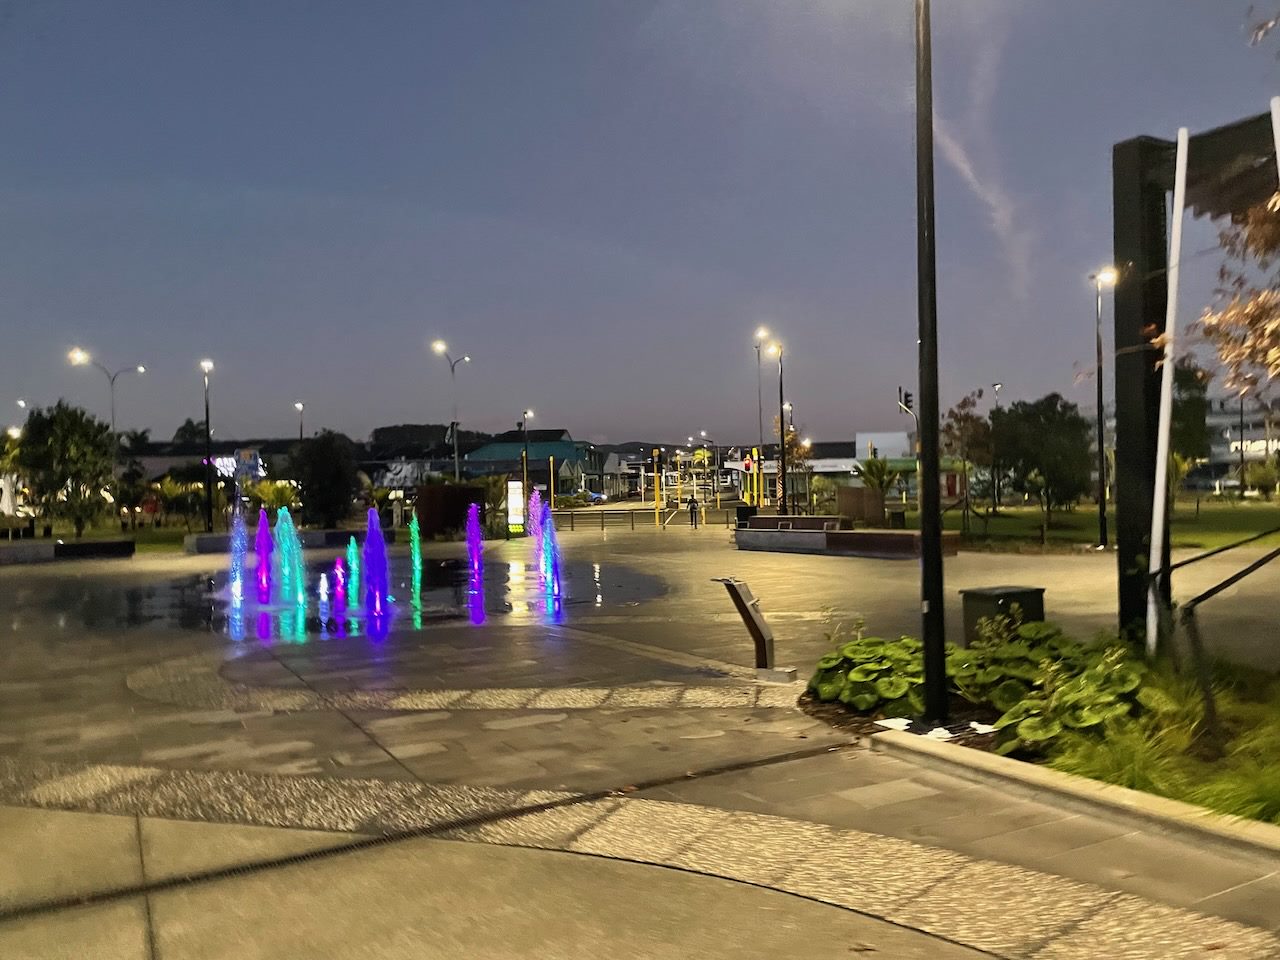 Pūtahi Park fountain lit up at night